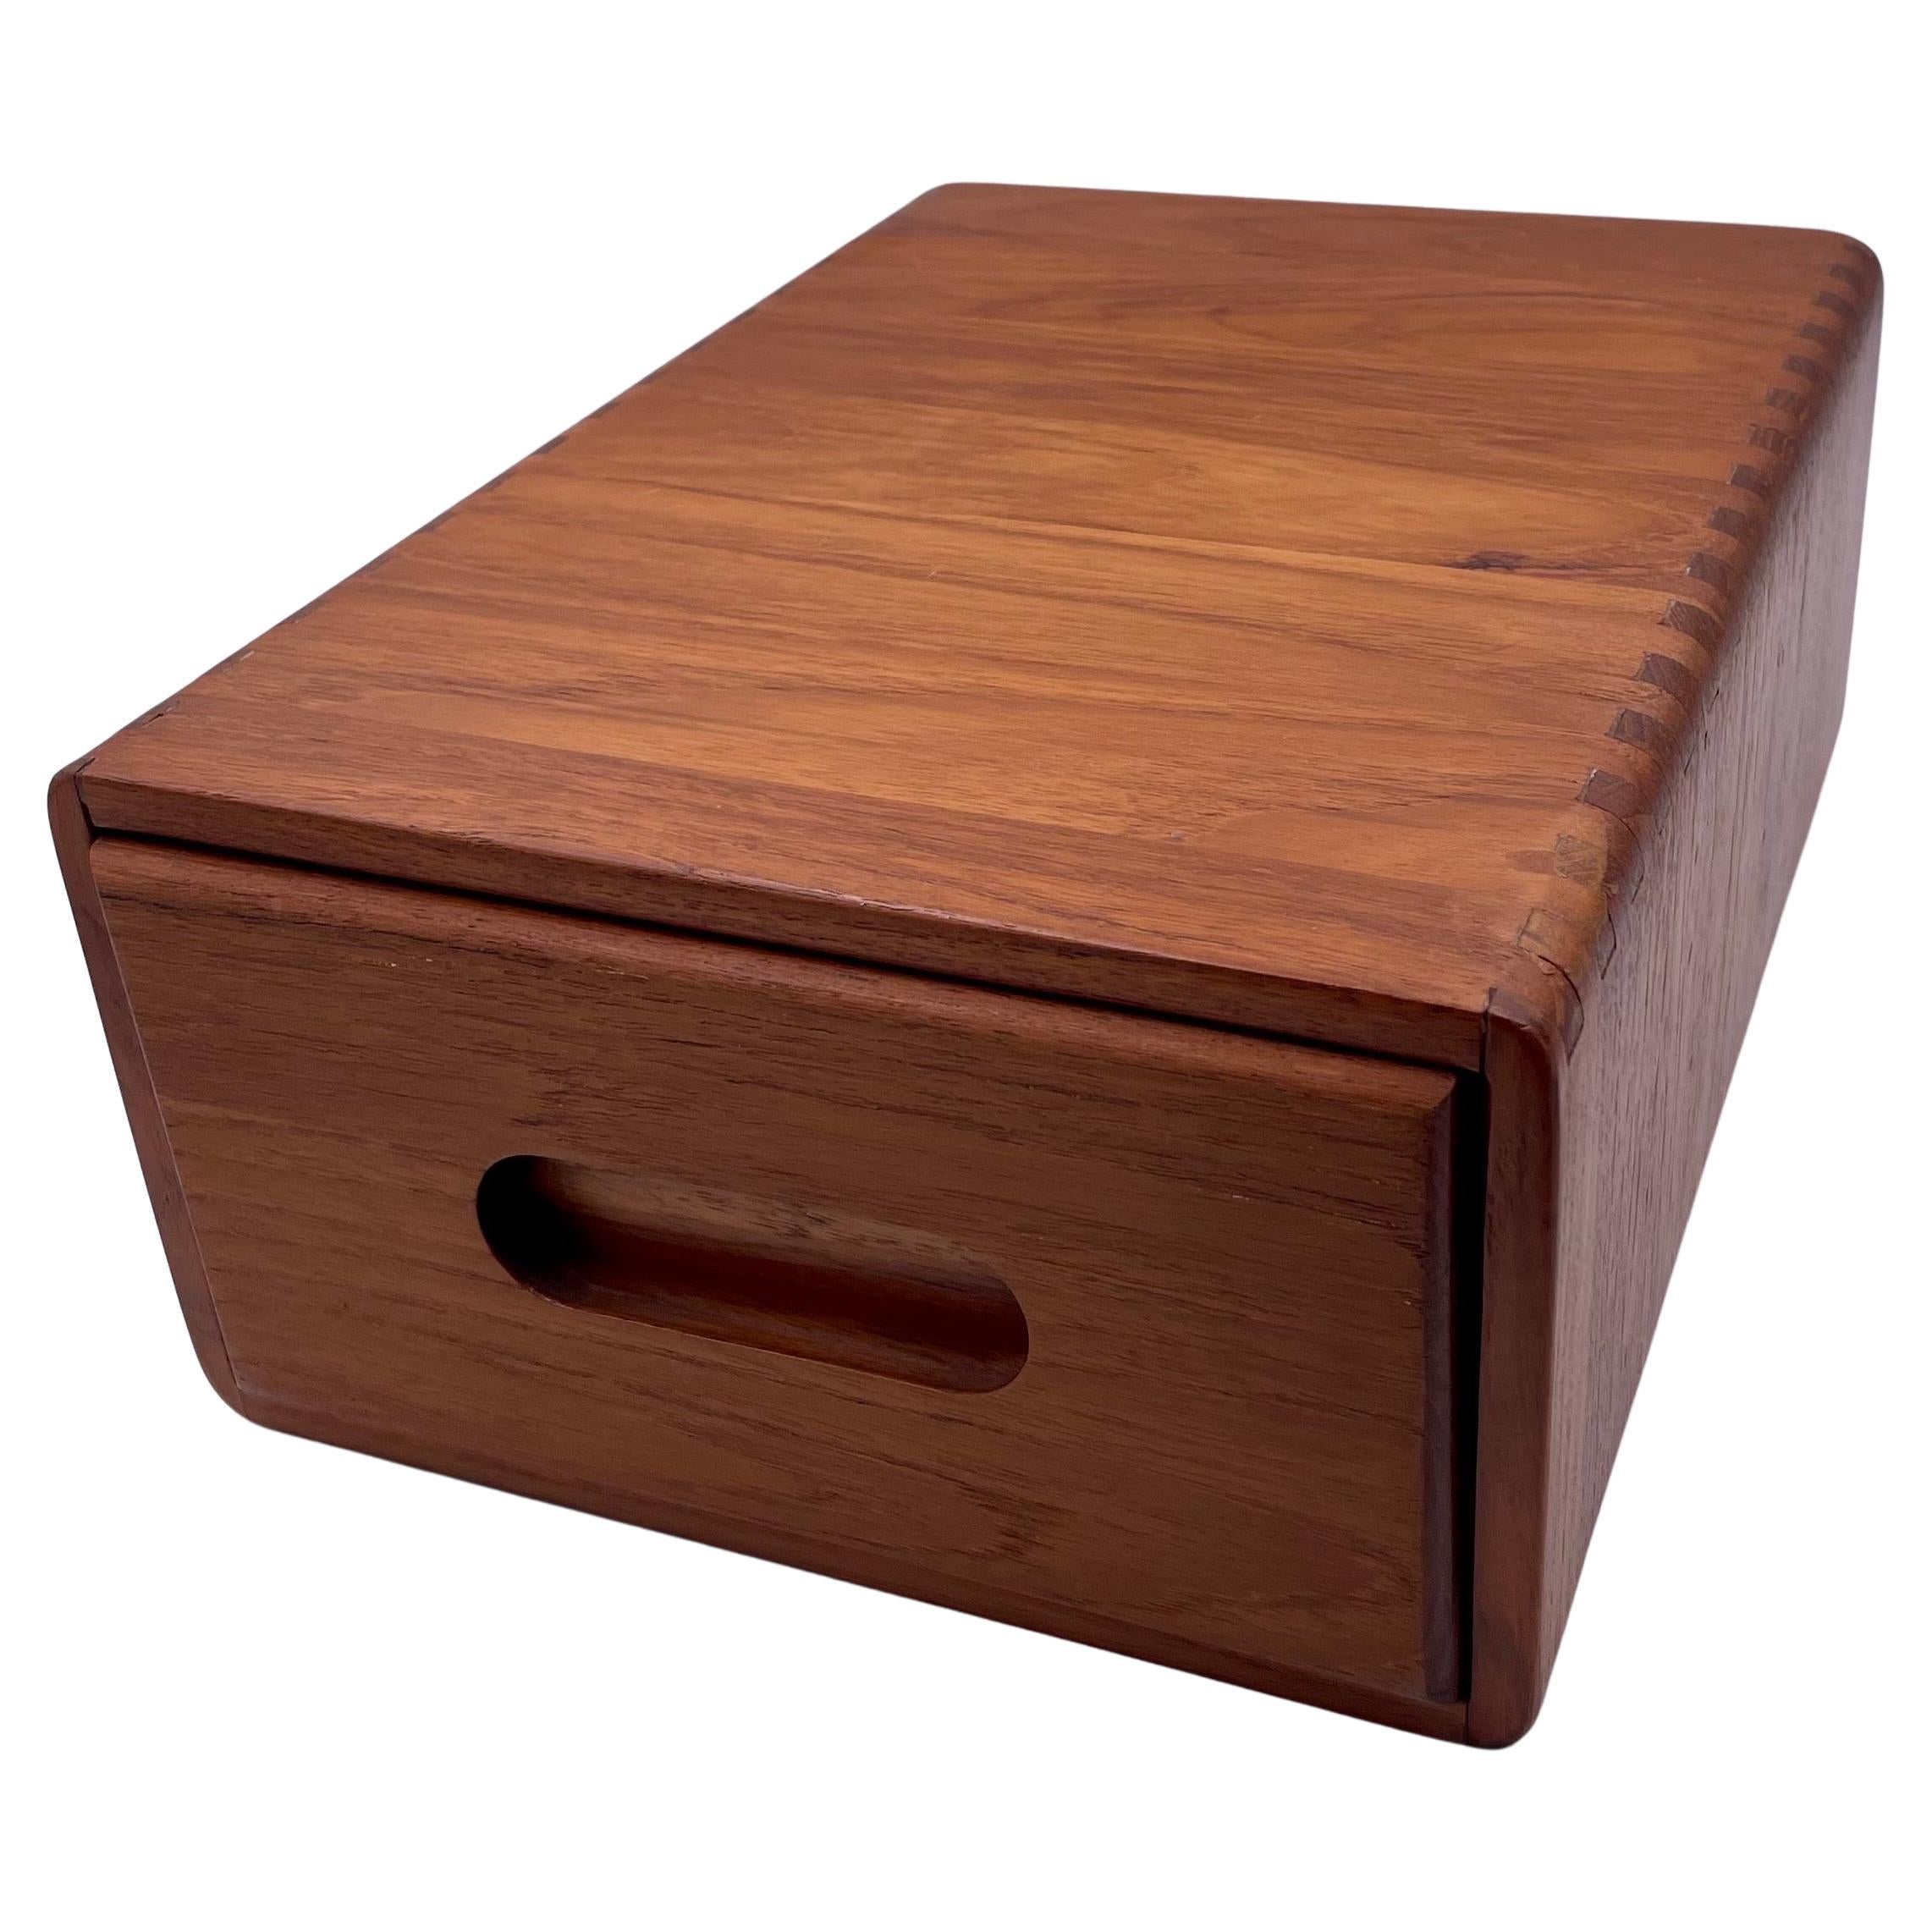 Danish Modern Solid Teak Dovetail Multiuse Box with Drawer